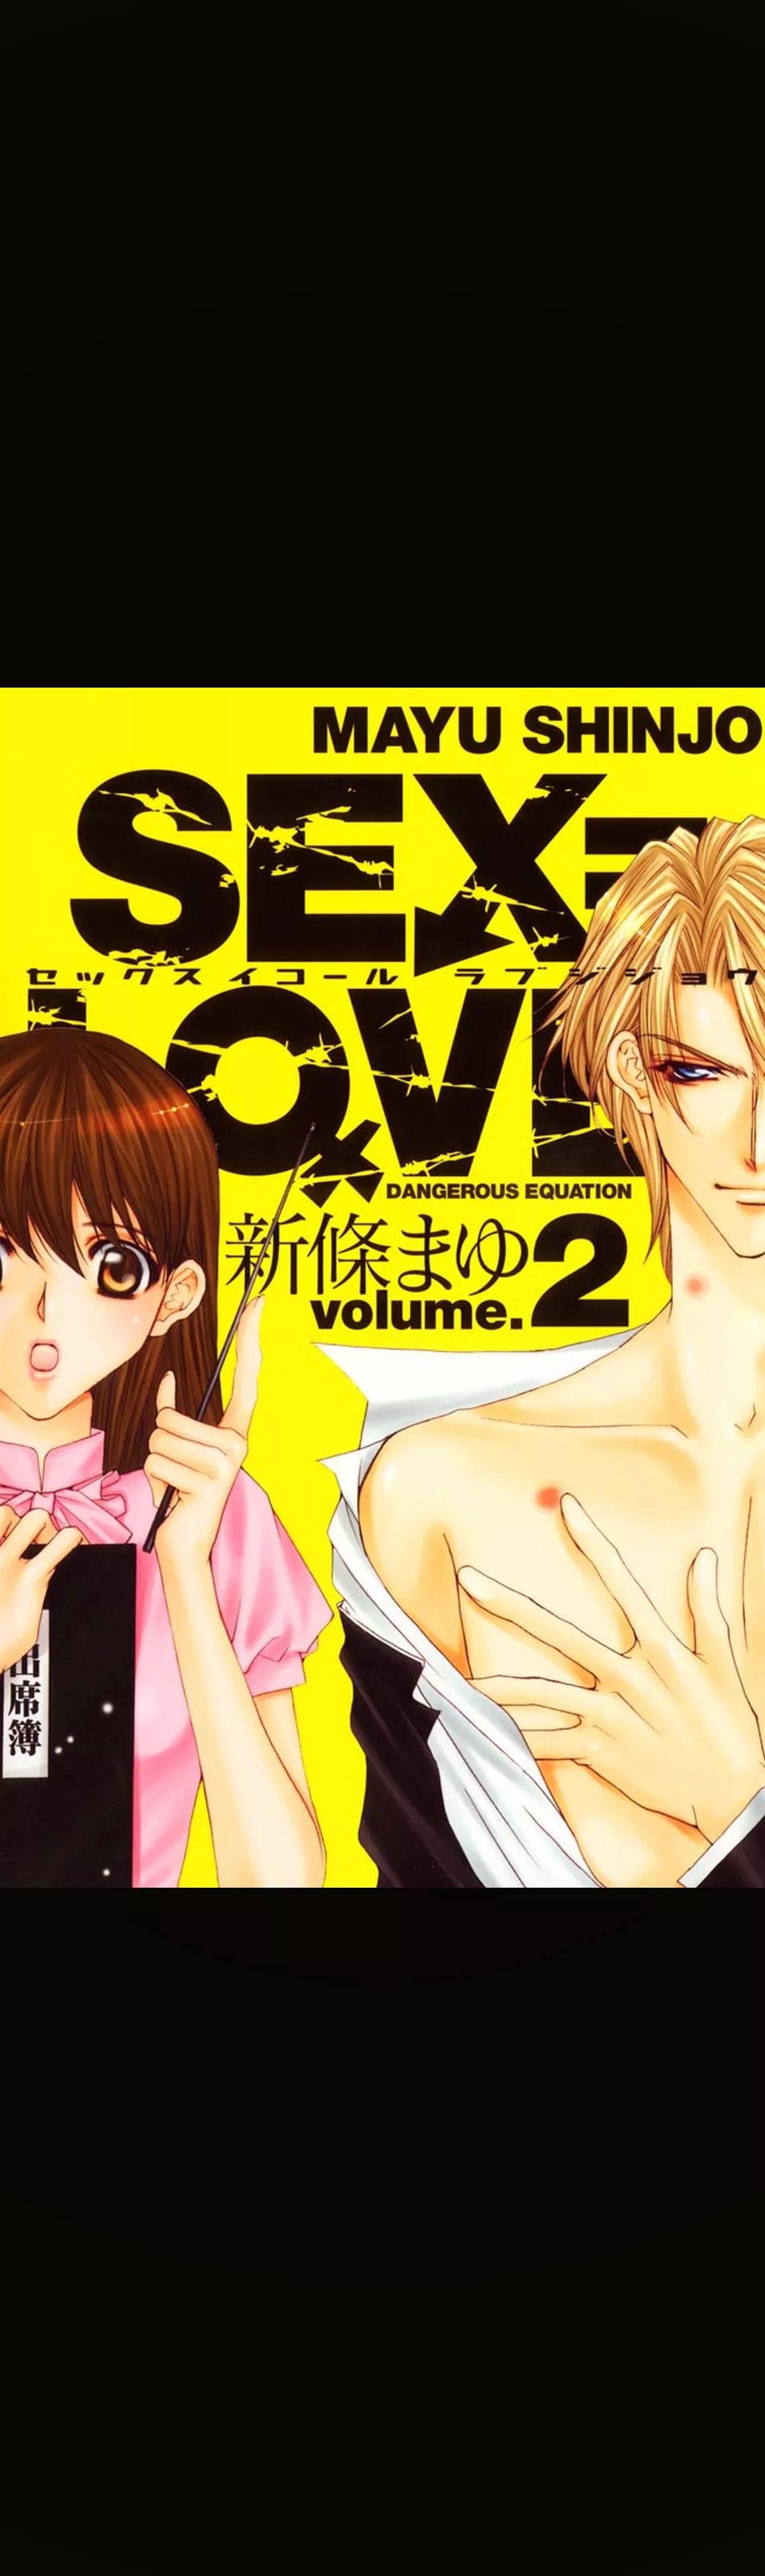 SEX＝LOVE2 volume.2